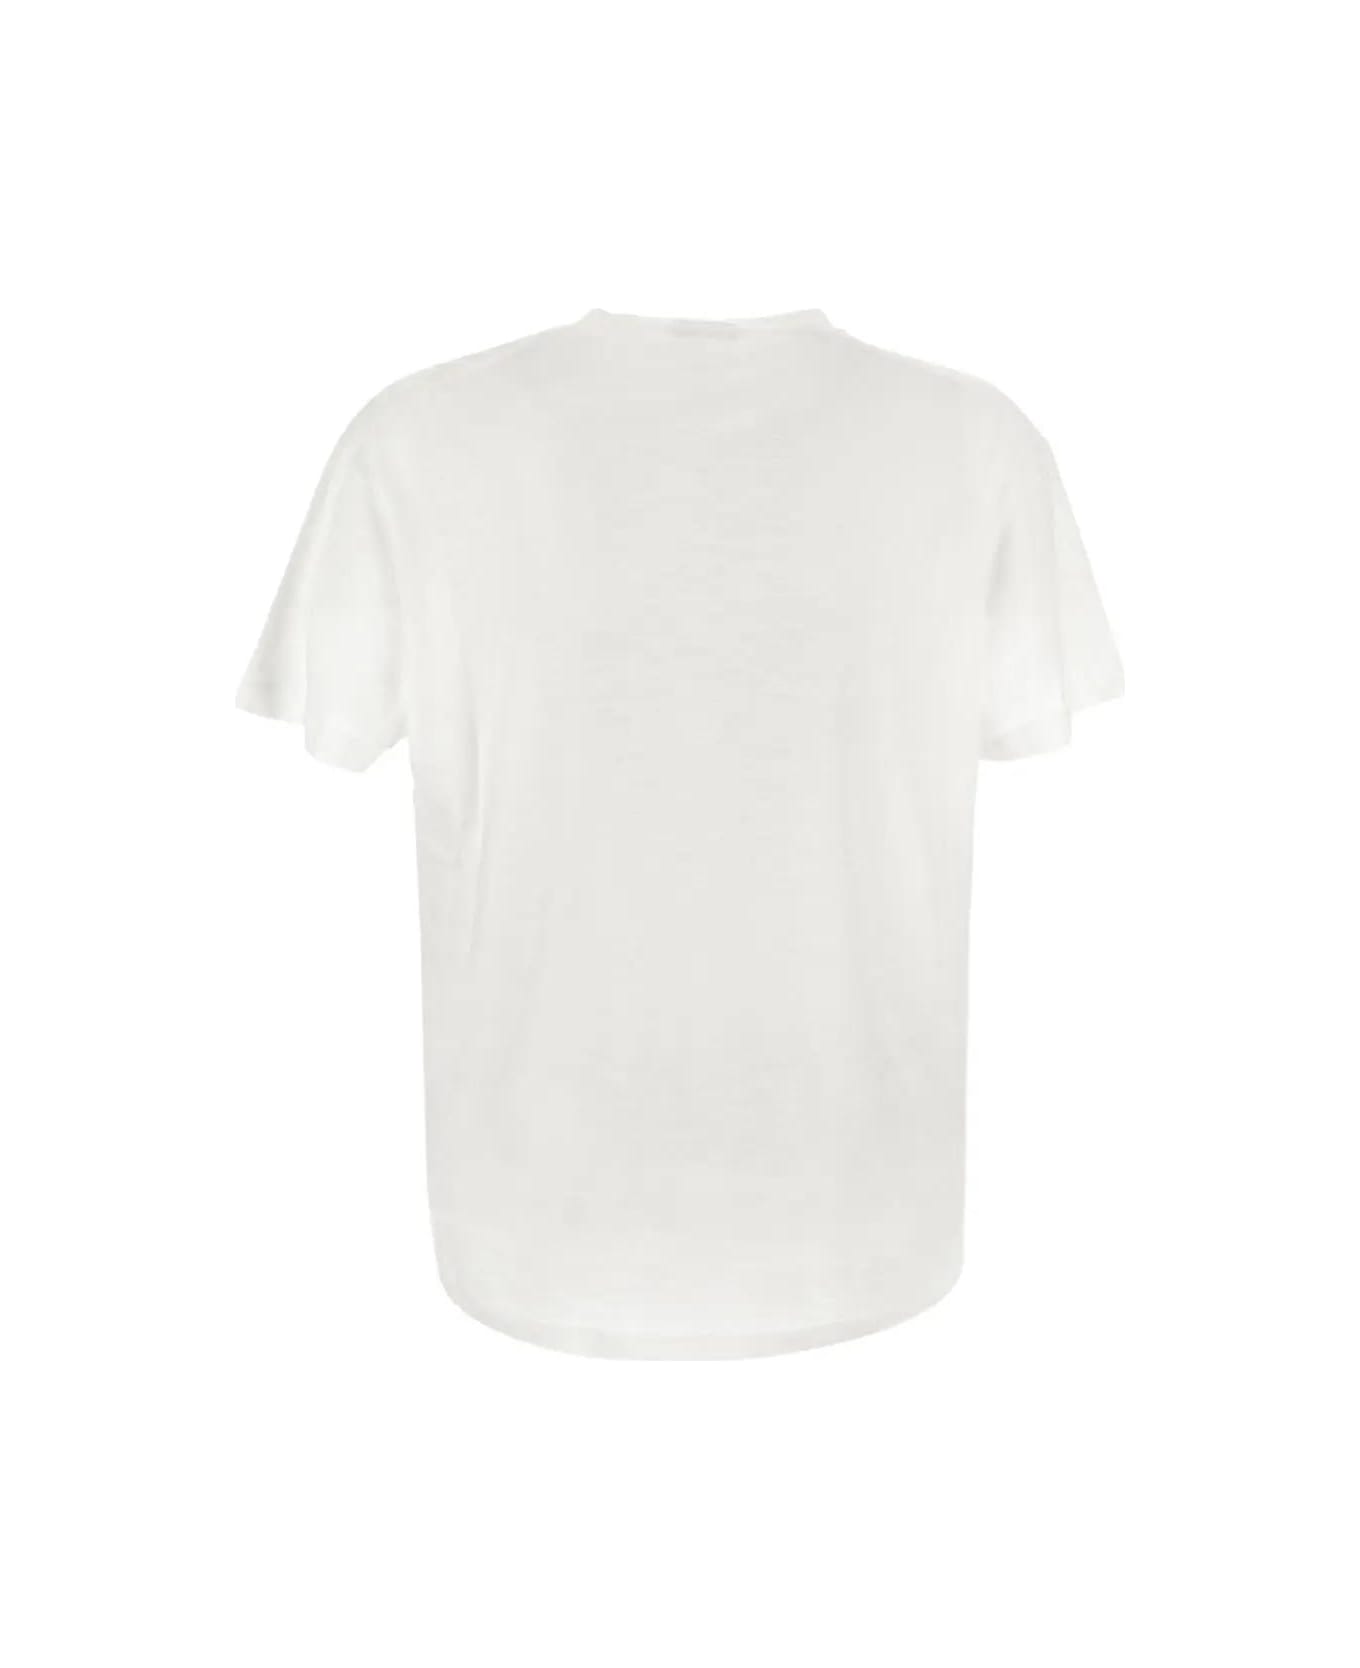 Tom Ford Classic T-shirt - White シャツ